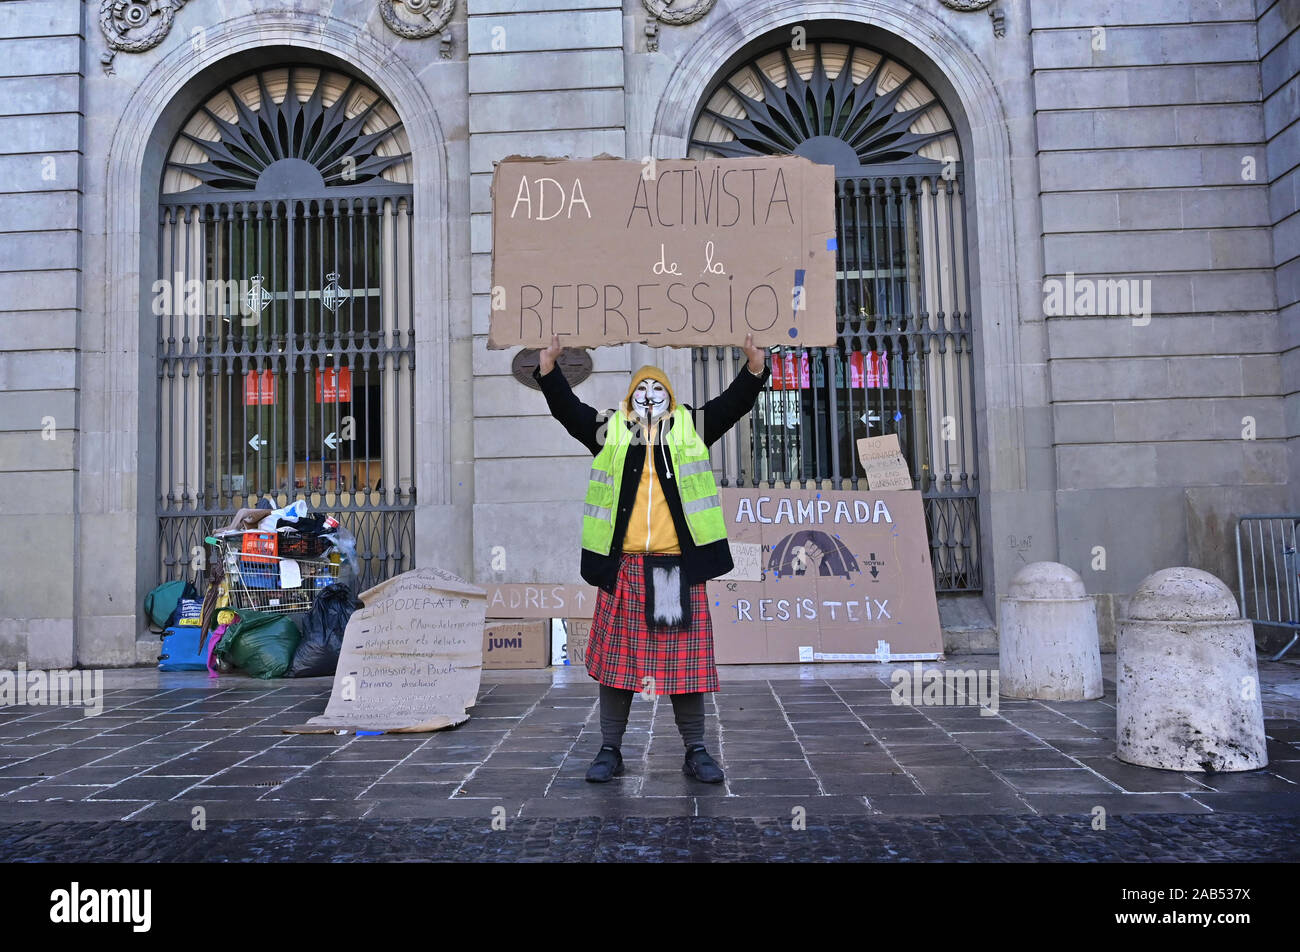 activist outside old city hall Barcelona Stock Photo